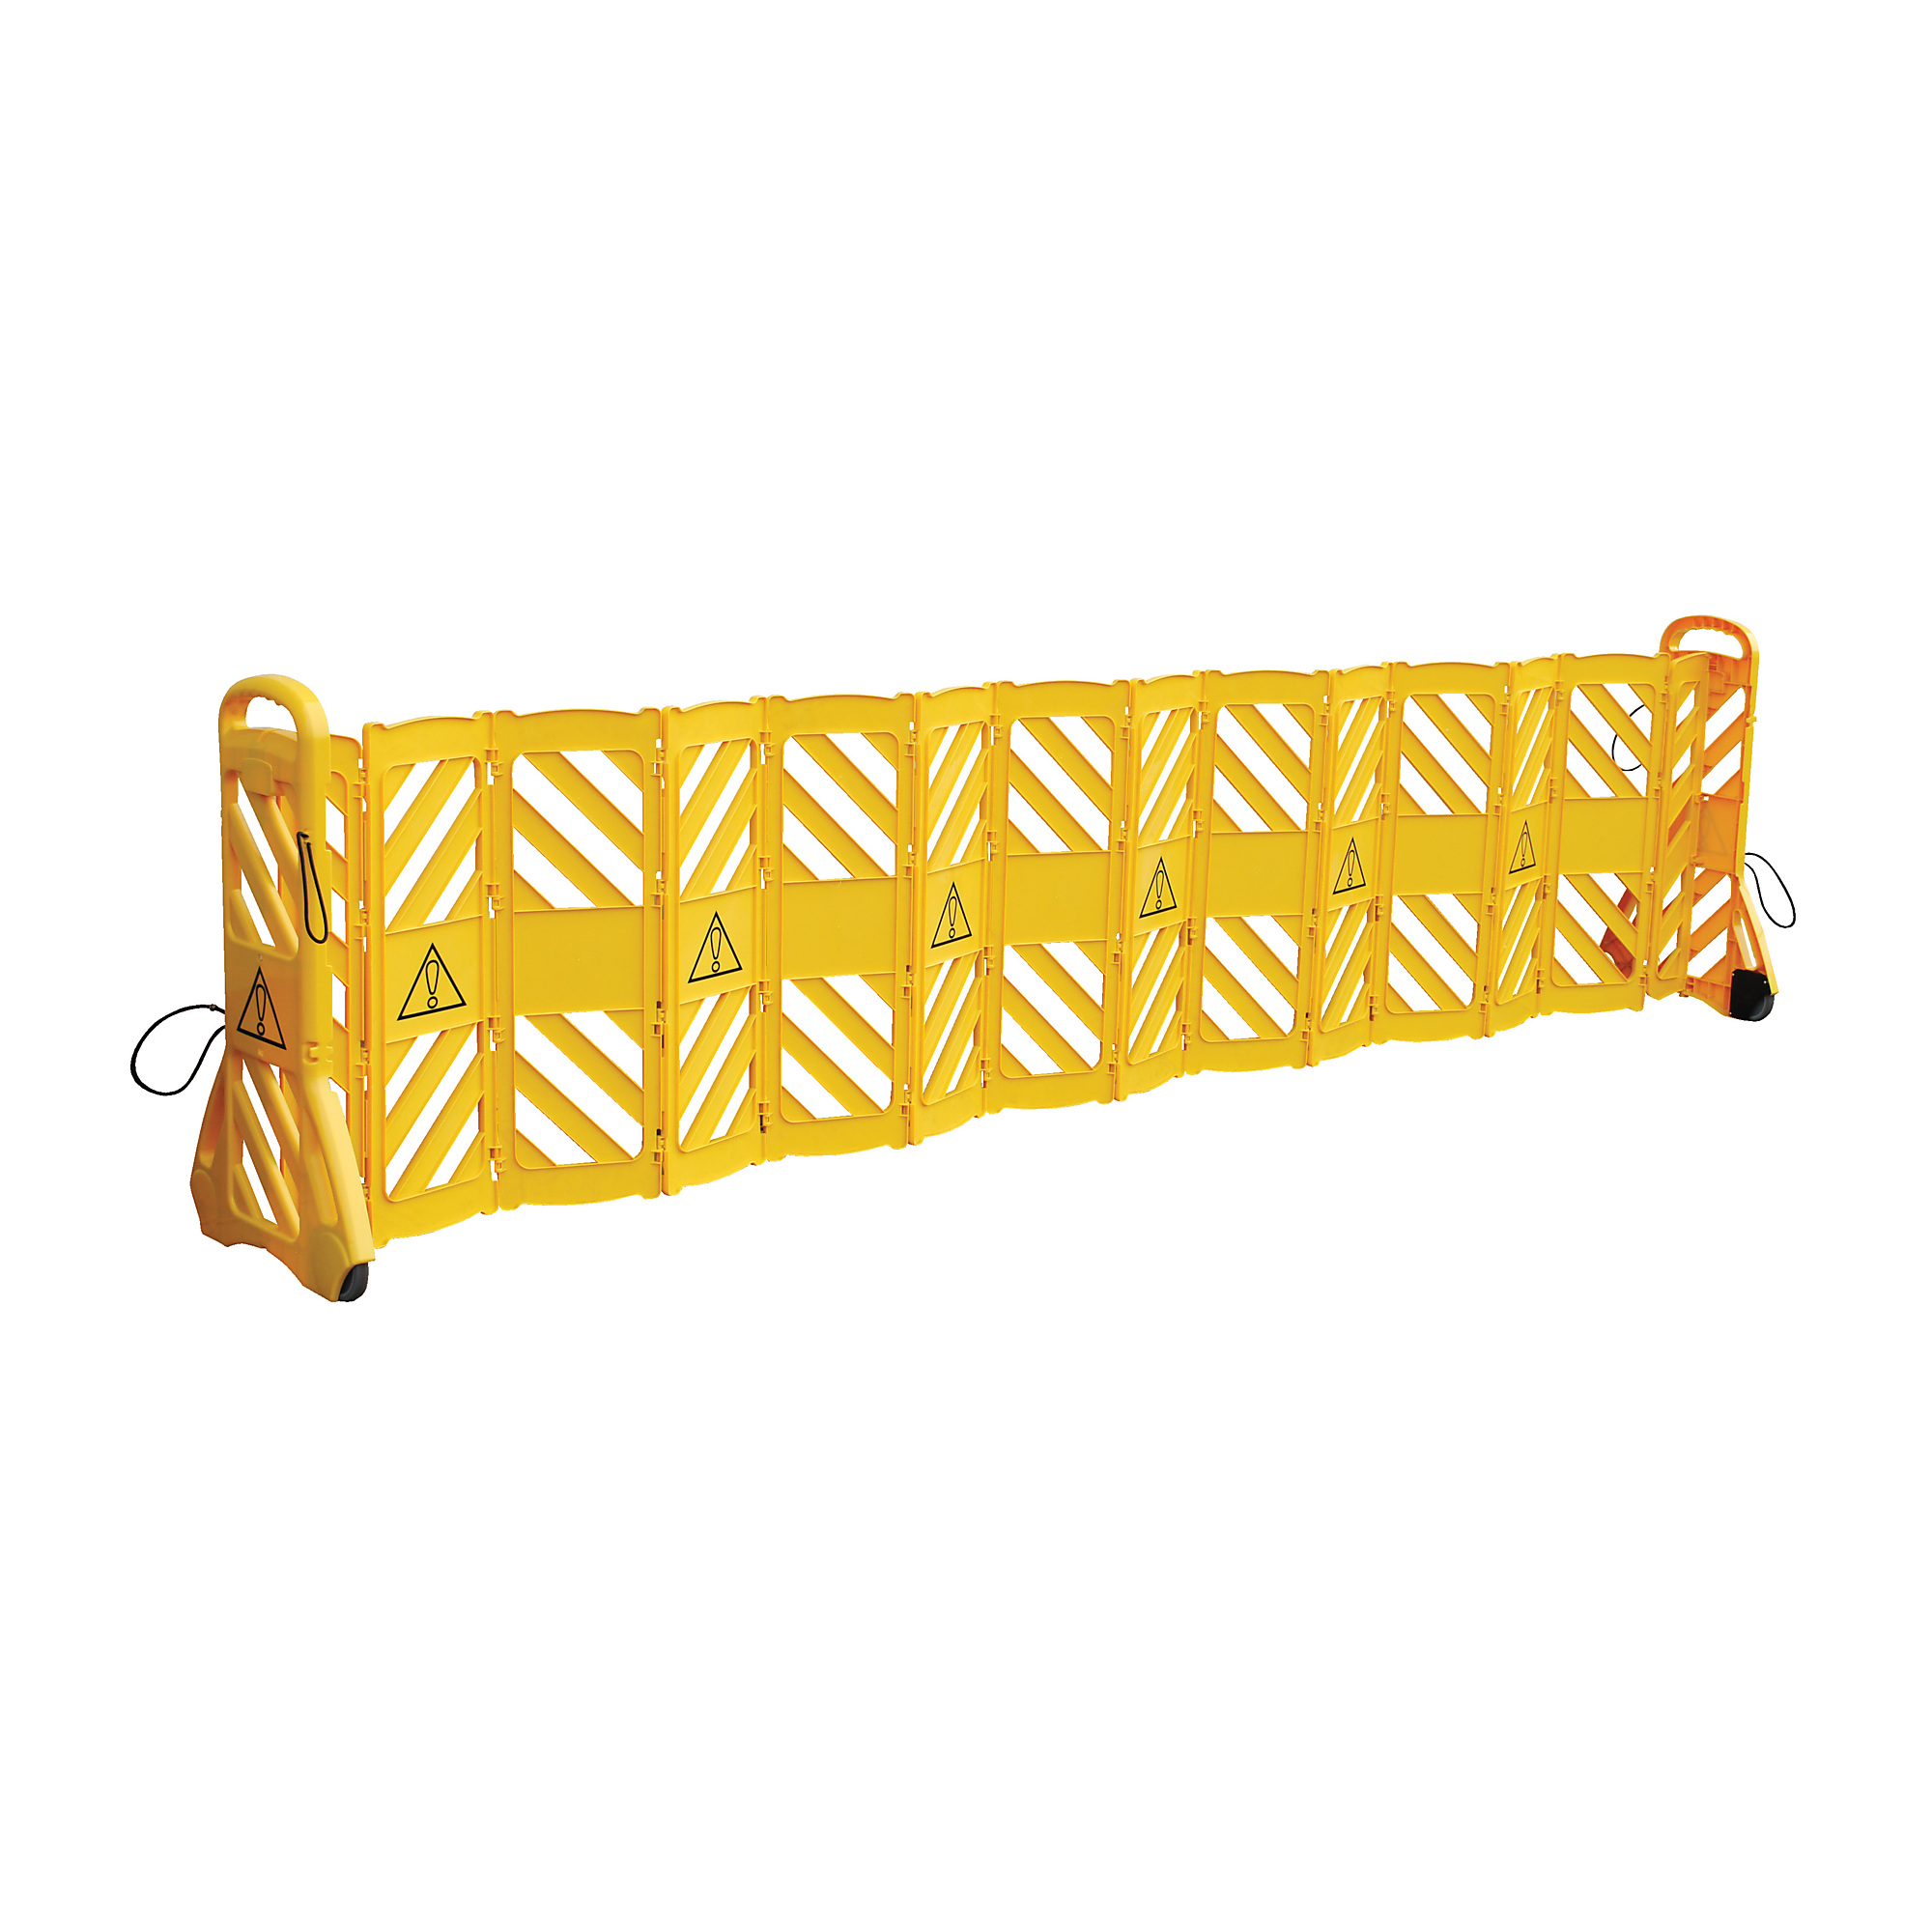 Vestil, Plastic mobile safety barrier, Color Yellow, Max. Width 13 in, Material Plastic, Model MSB-138